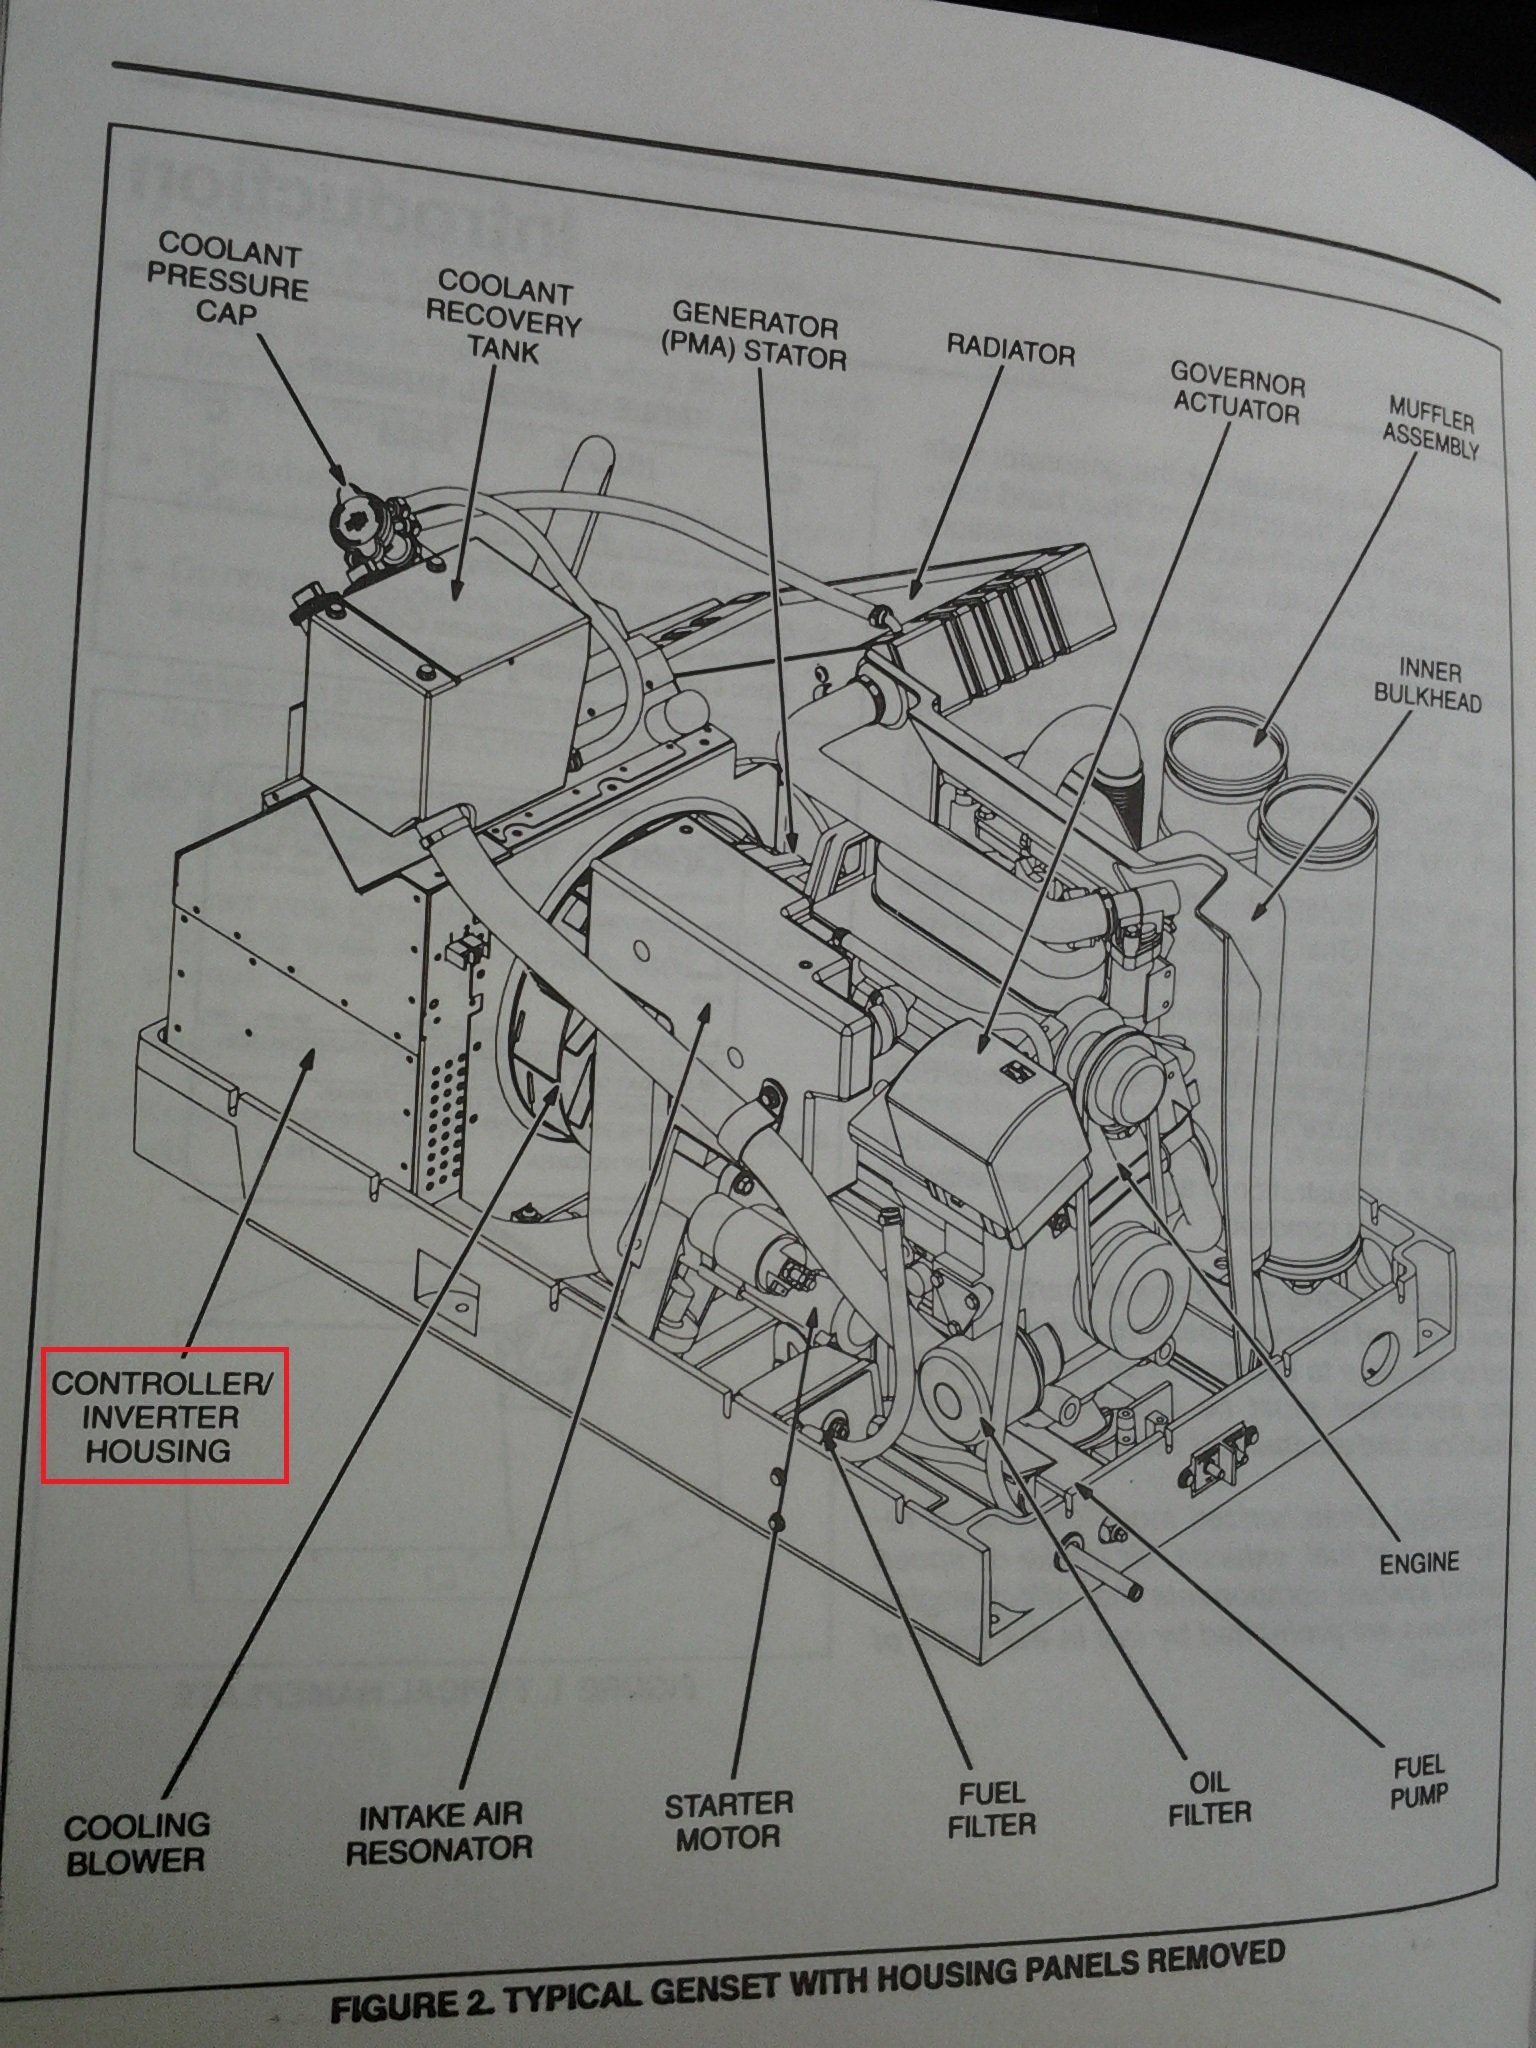 Onan rv generator parts manual